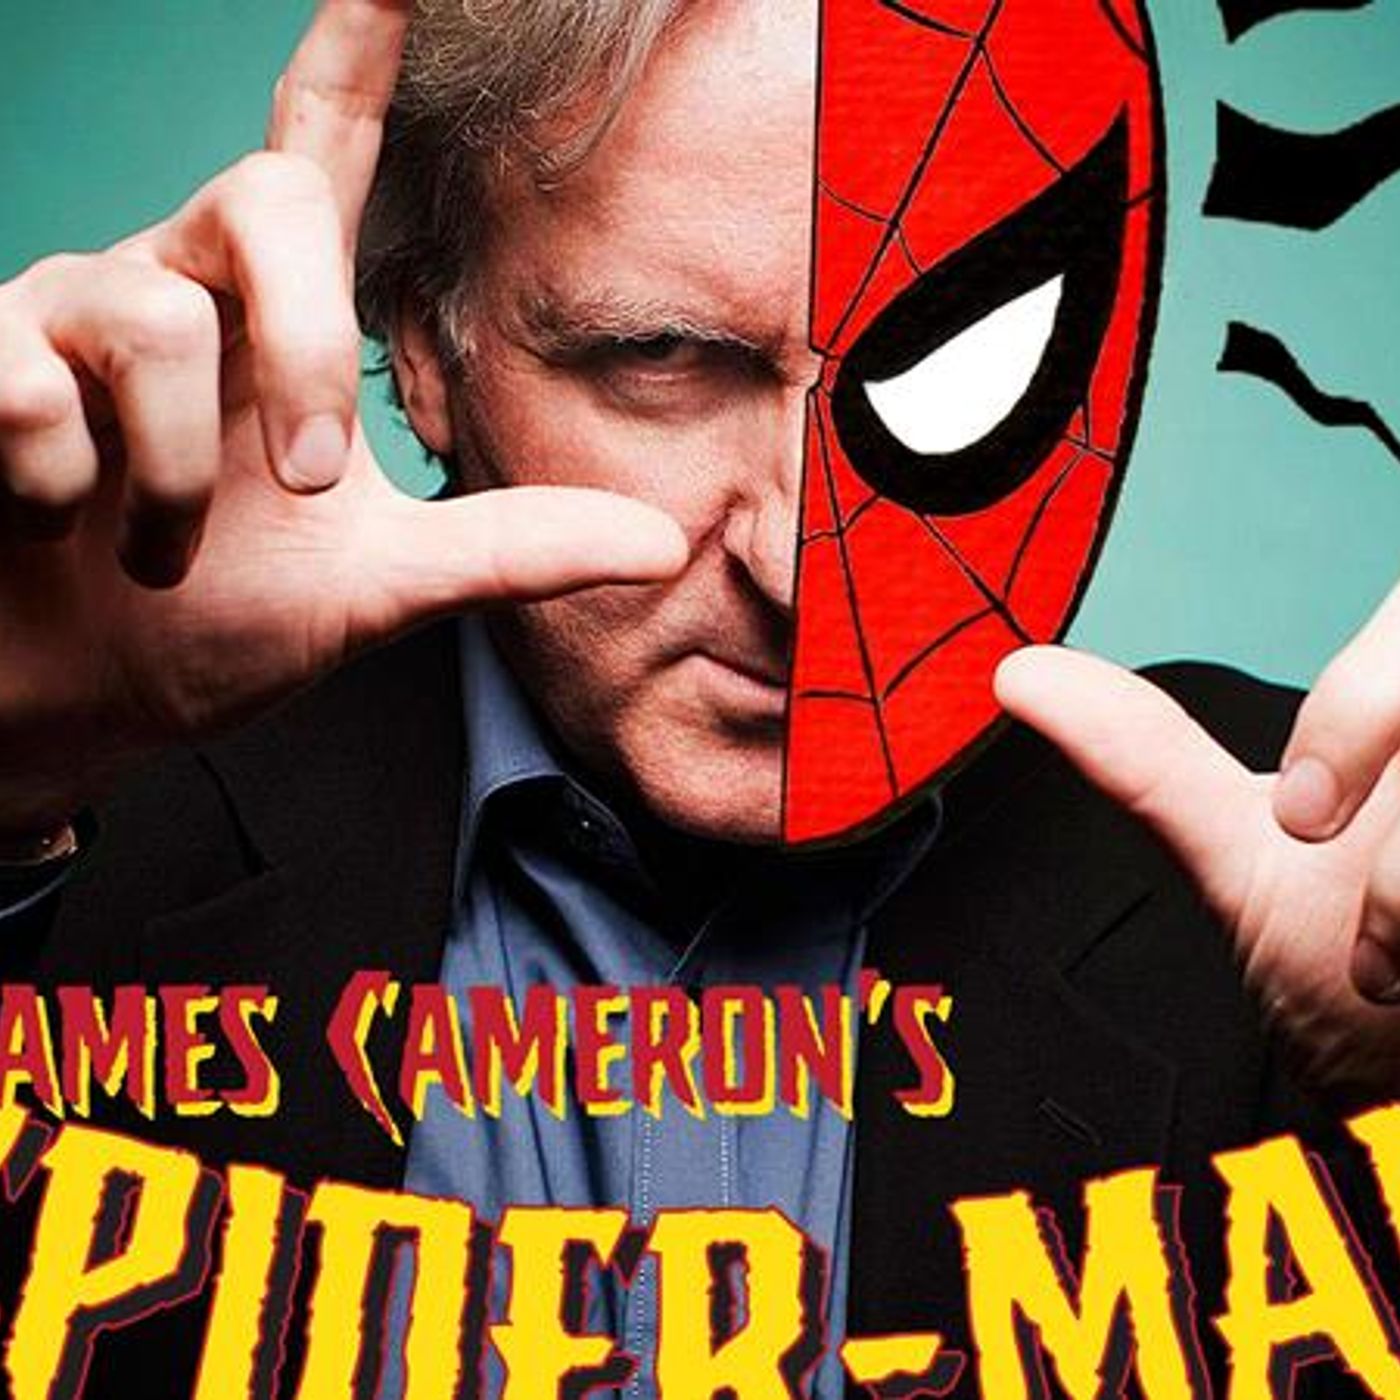 56: James Cameron’s Spider-Man, Part 2